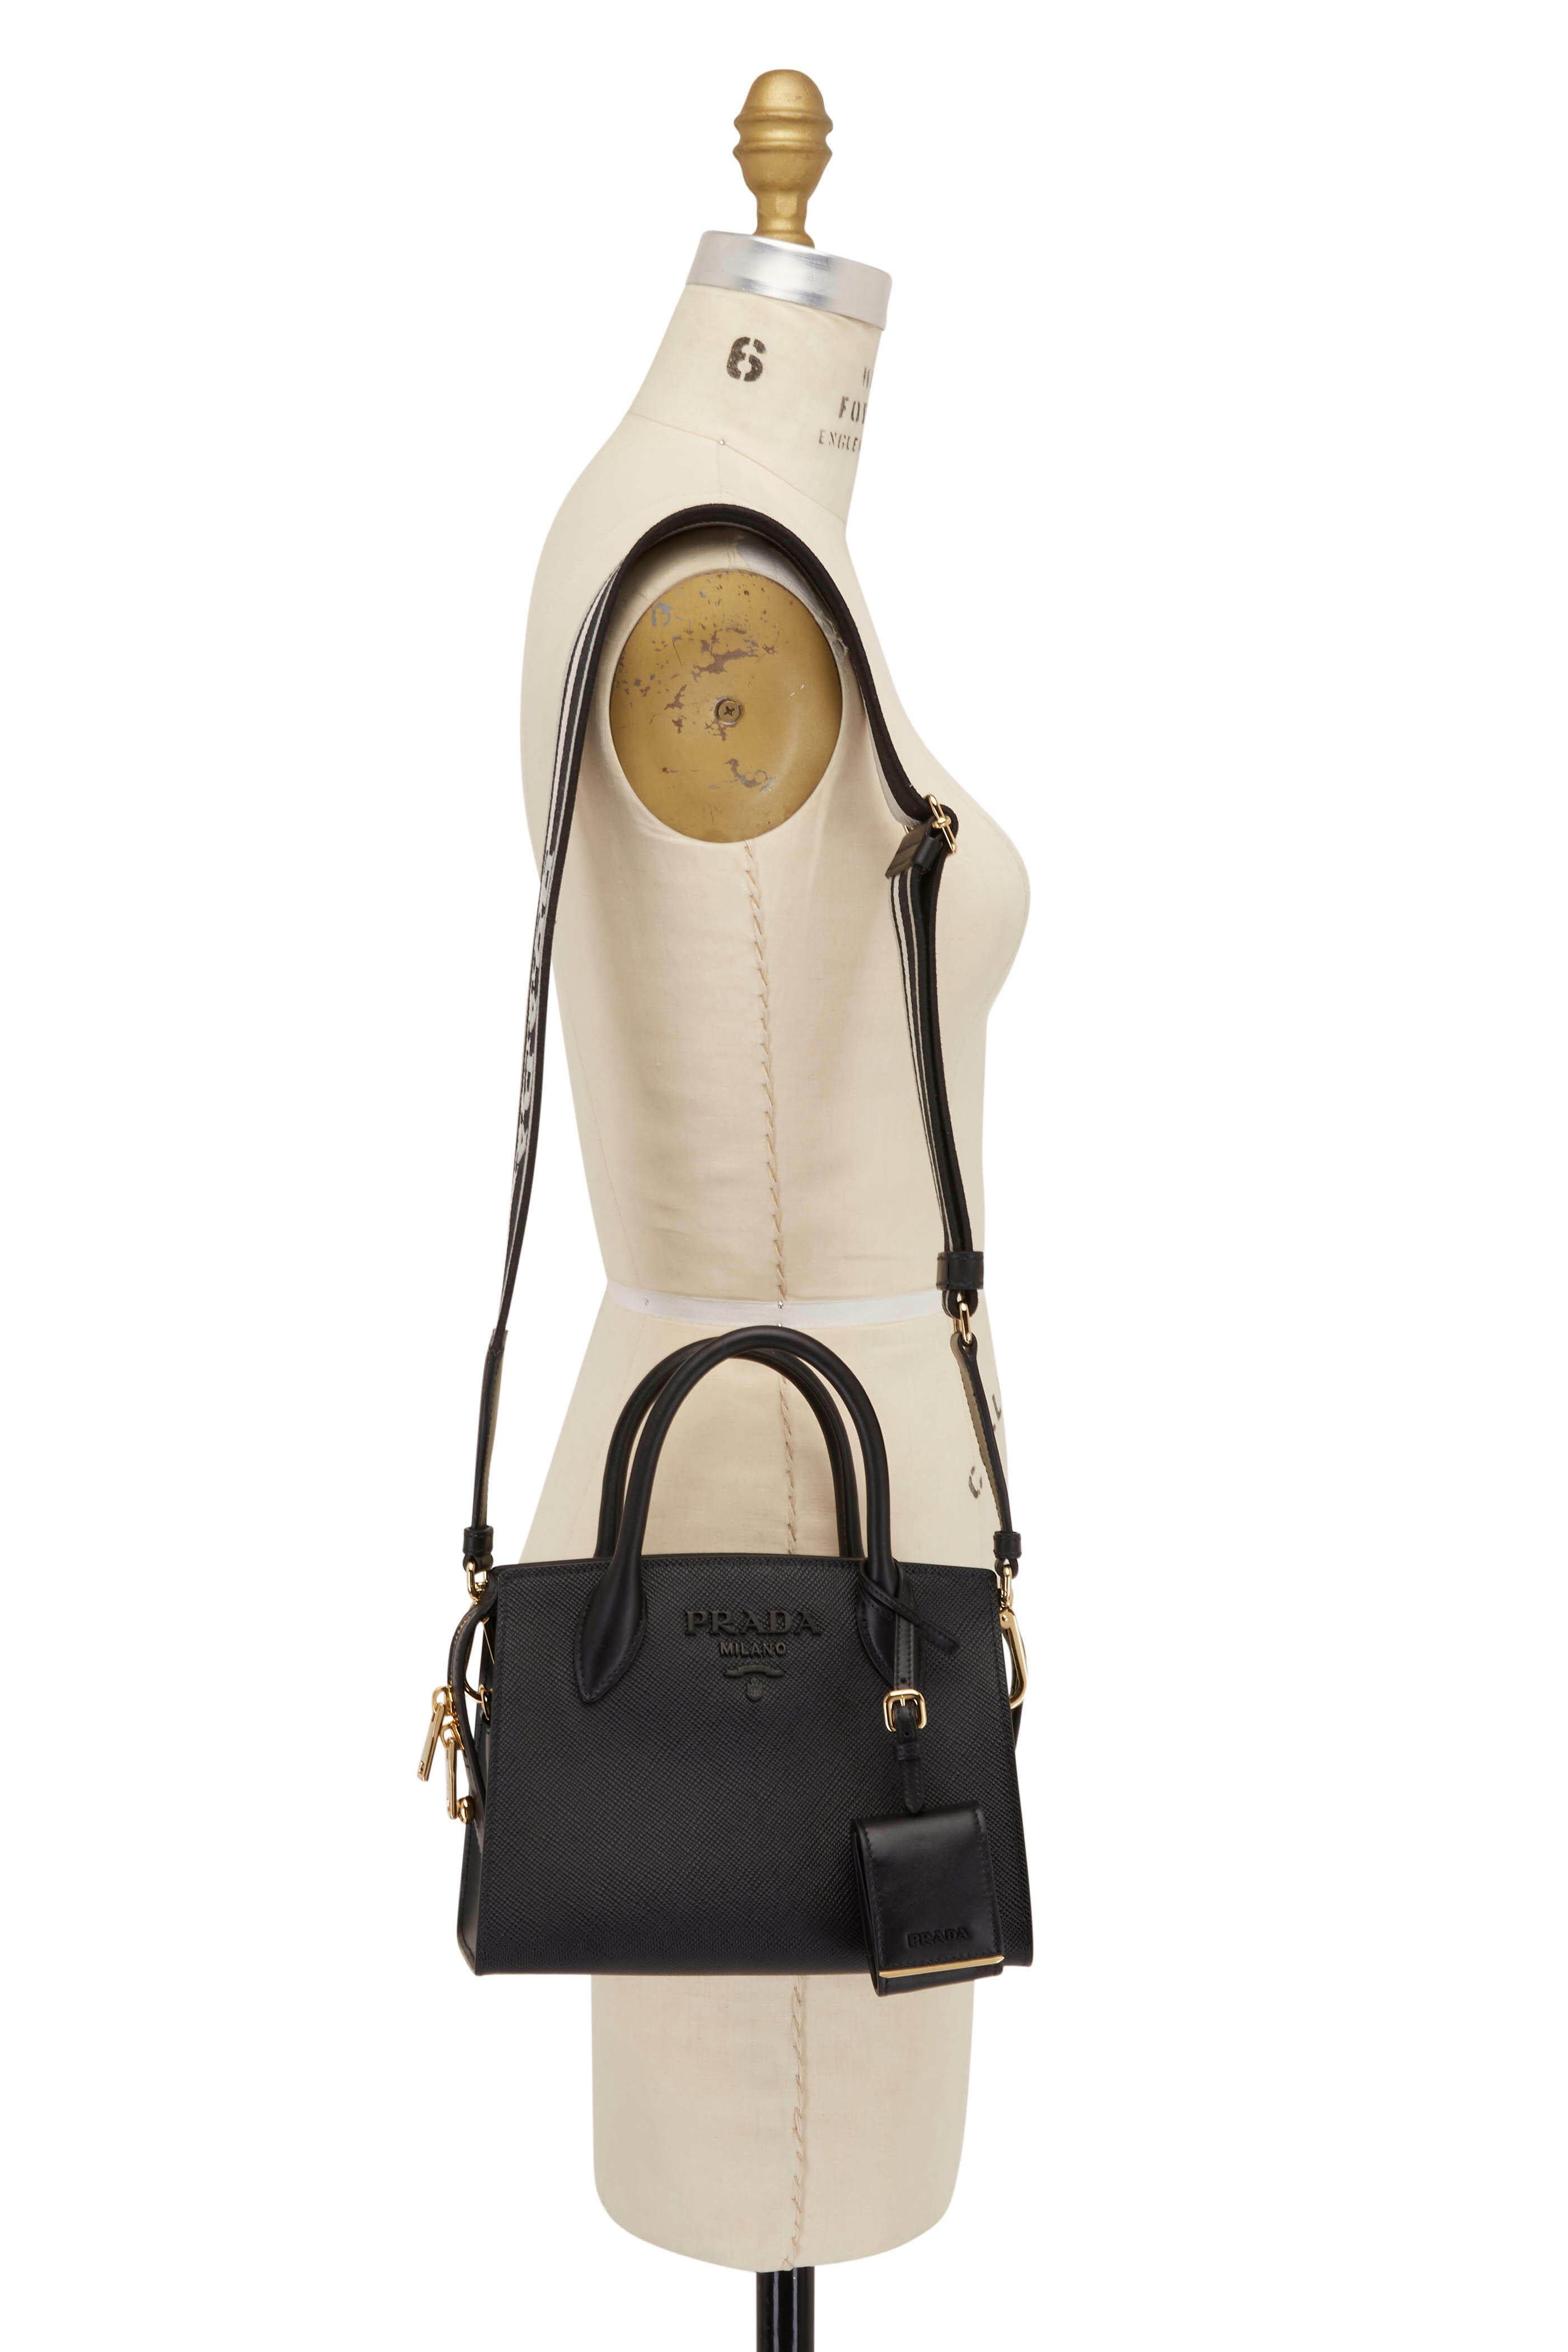 Prada Saffiano Leather Top Handle Bag, Black